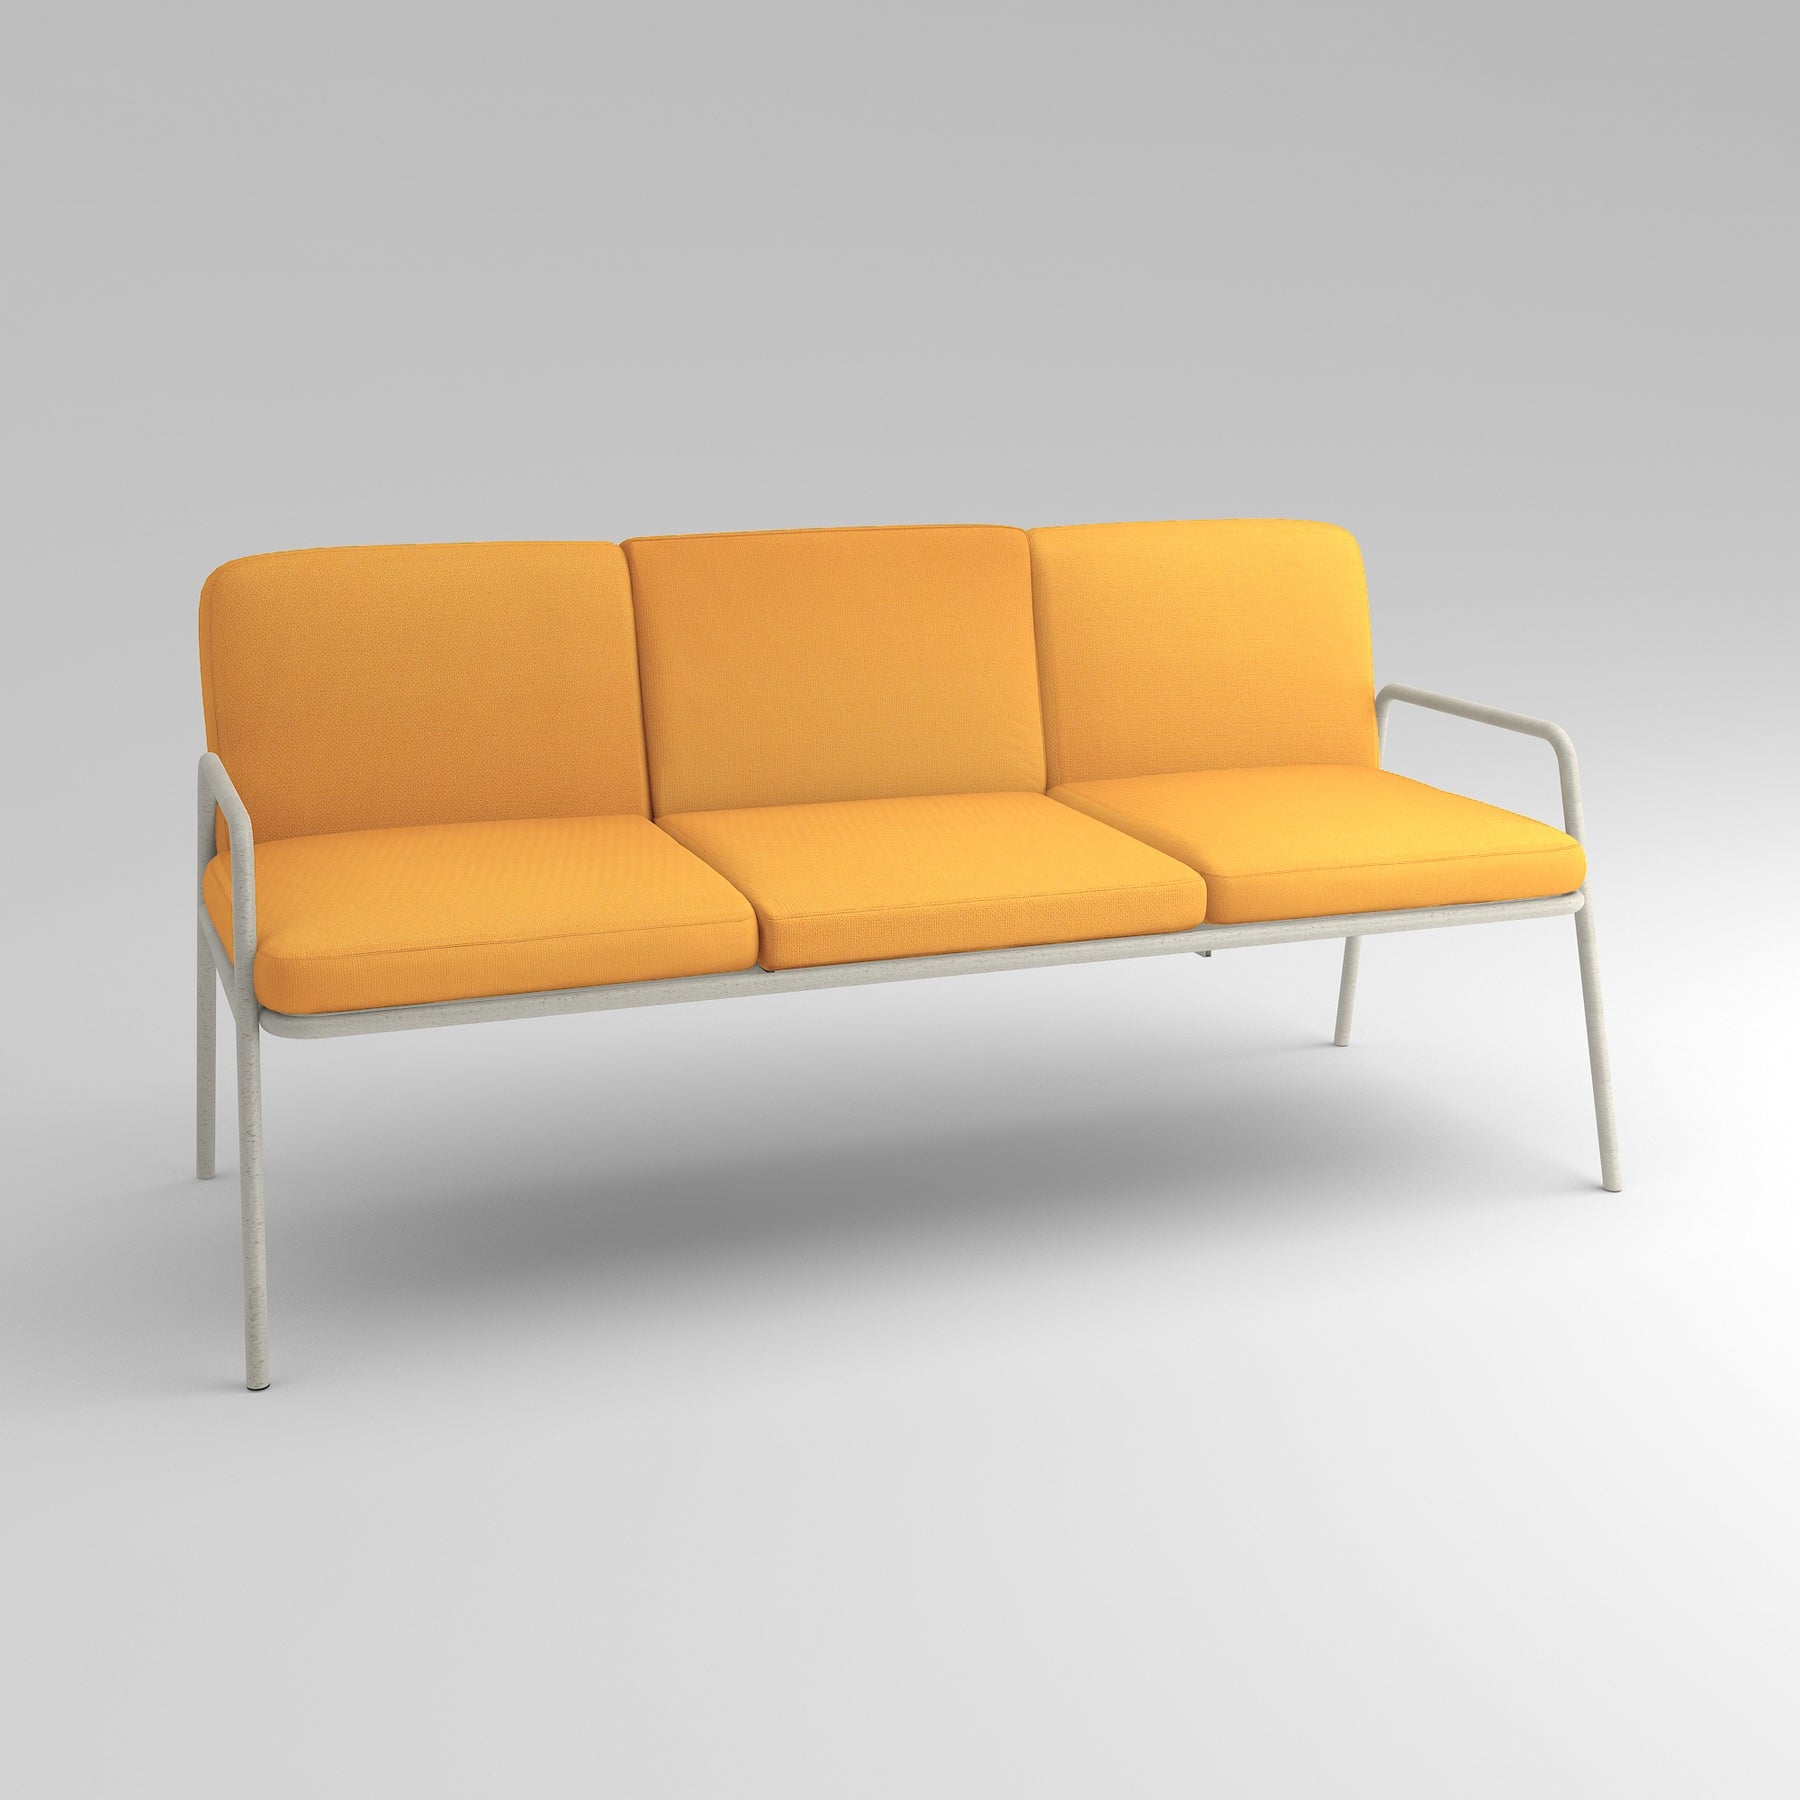 Bistro Outdoor Sofa - 3 Seater